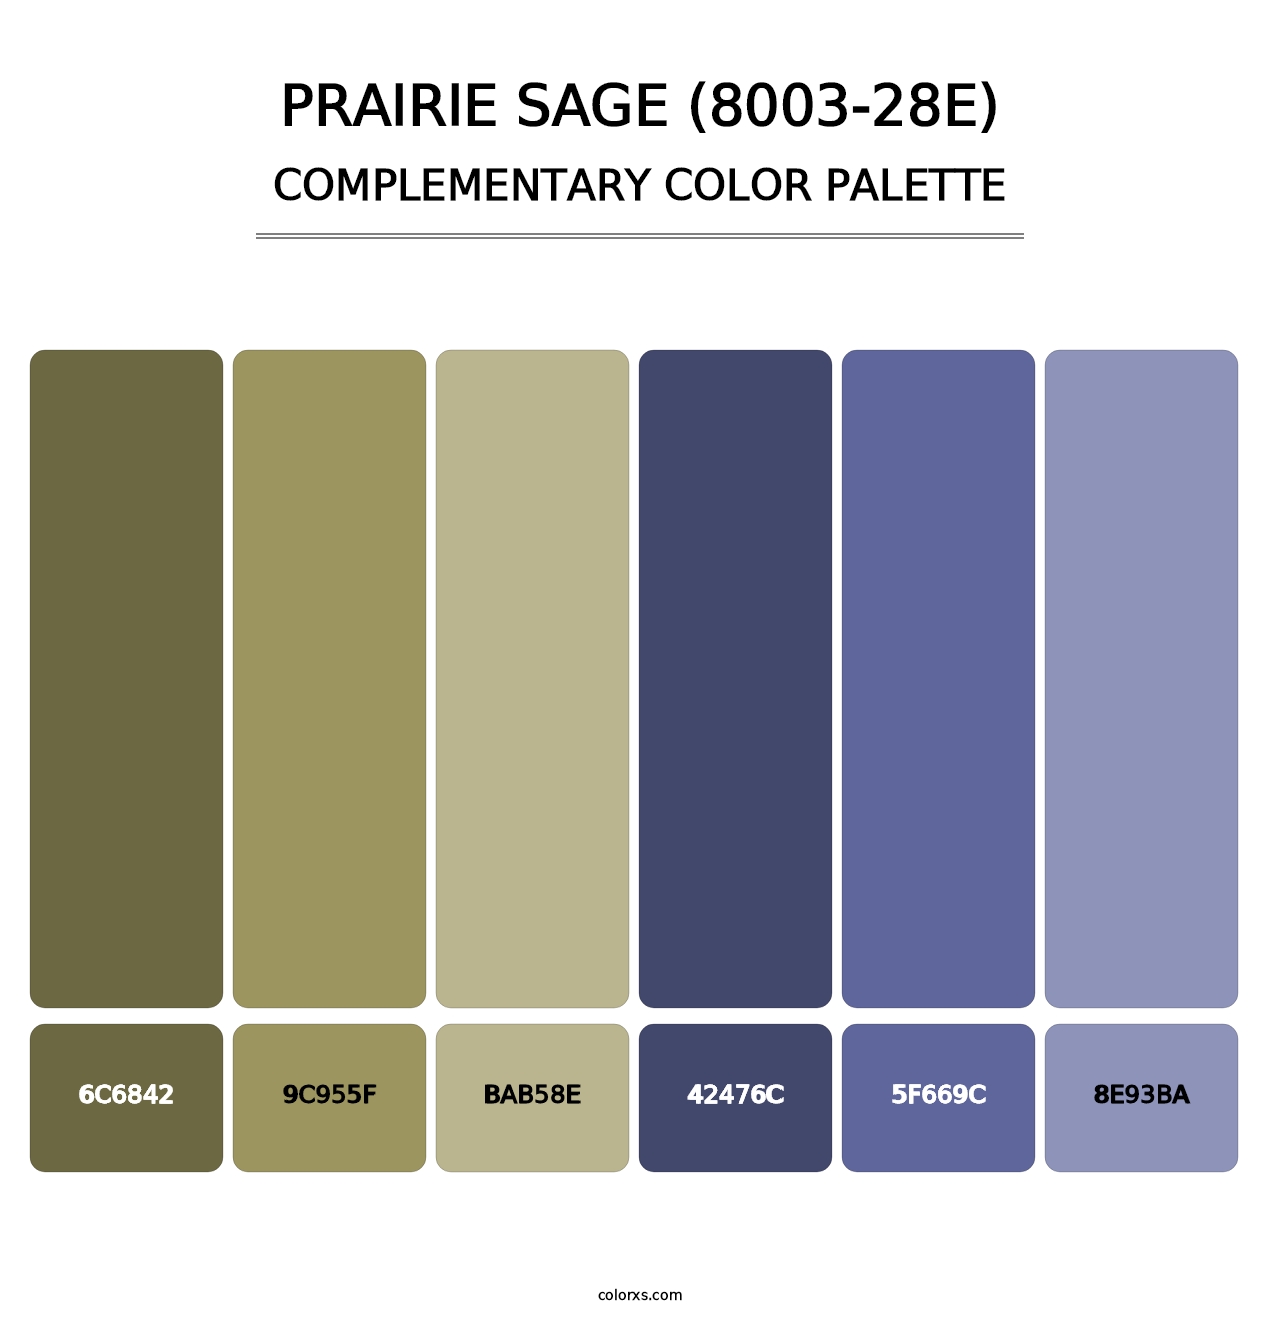 Prairie Sage (8003-28E) - Complementary Color Palette